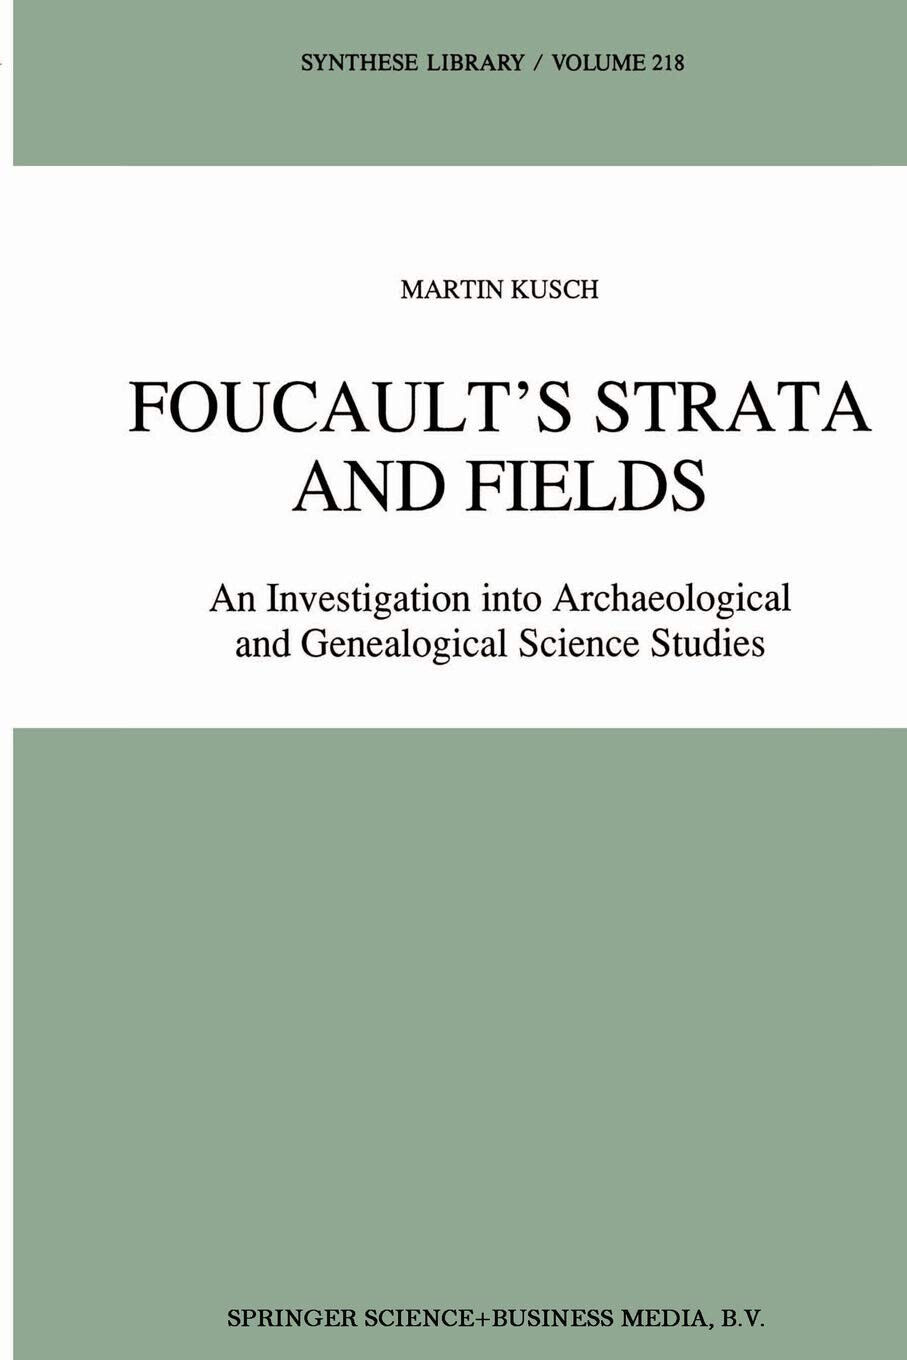 Foucault s Strata and Fields - Maren Kusch - Springer, 2013 libro usato